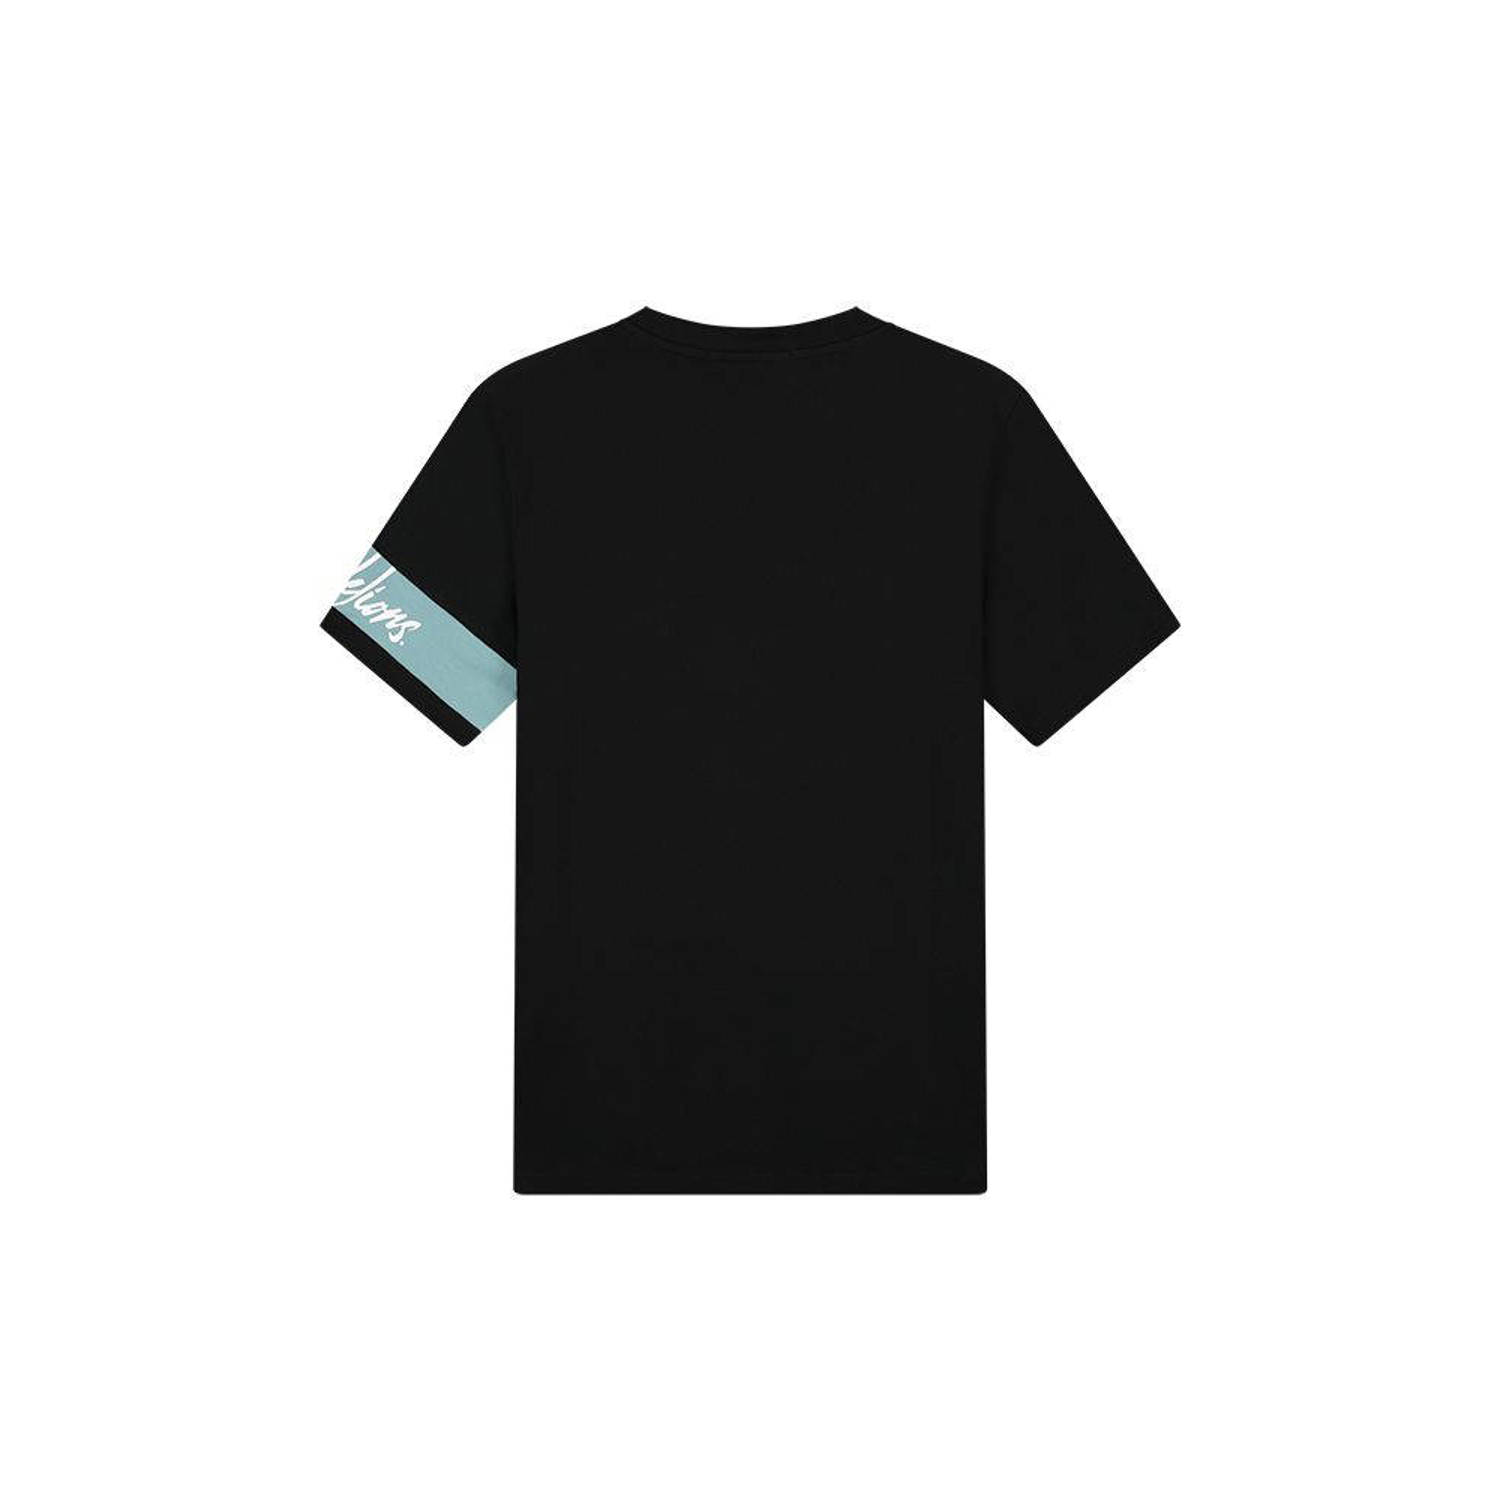 Malelions T-shirt Captain met logo zwart